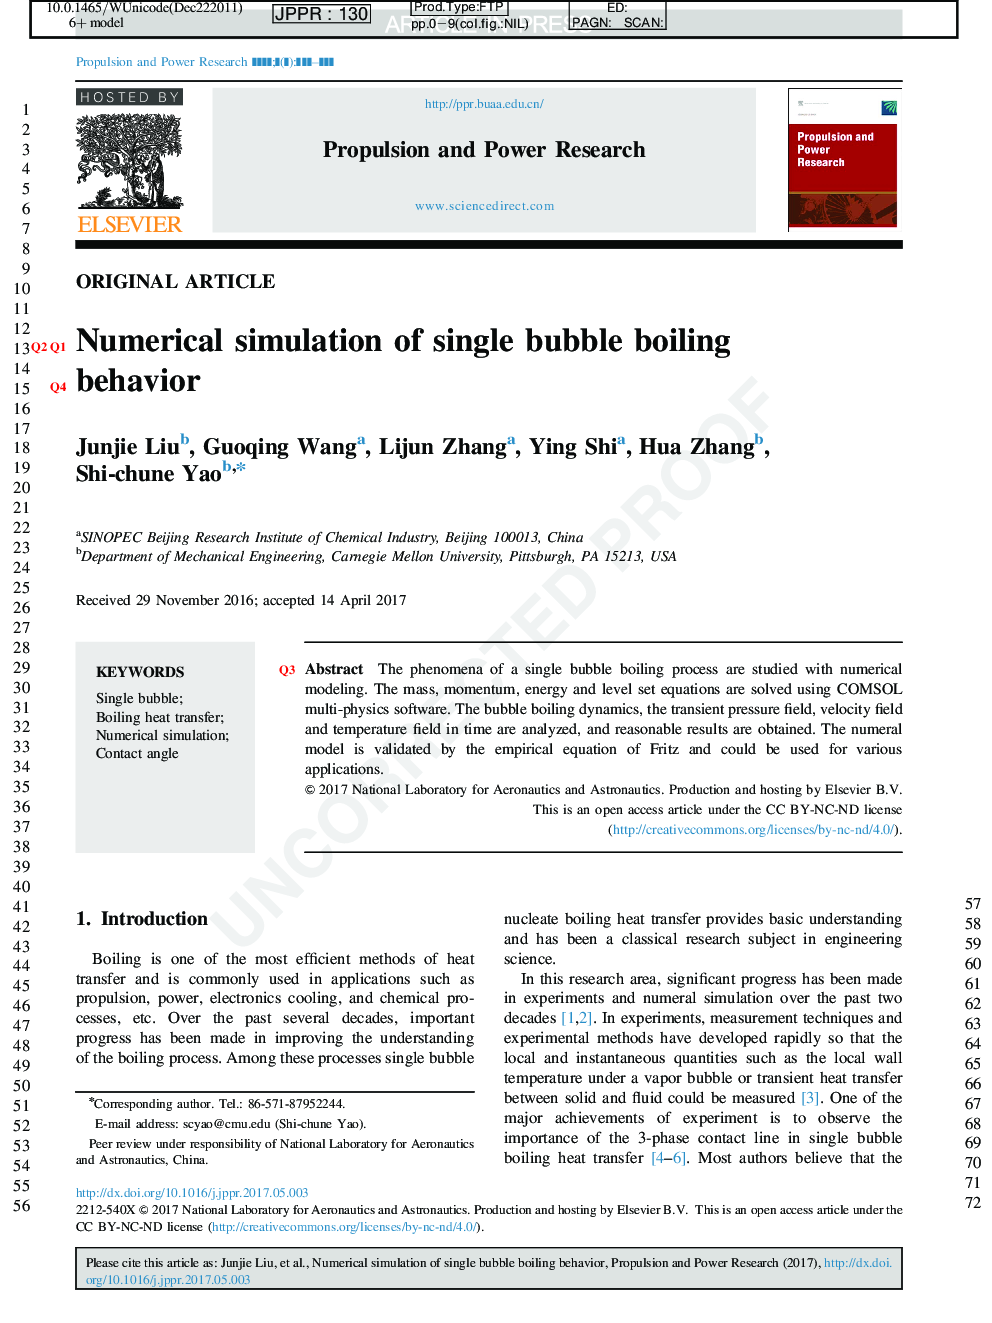 Numerical simulation of single bubble boiling behavior